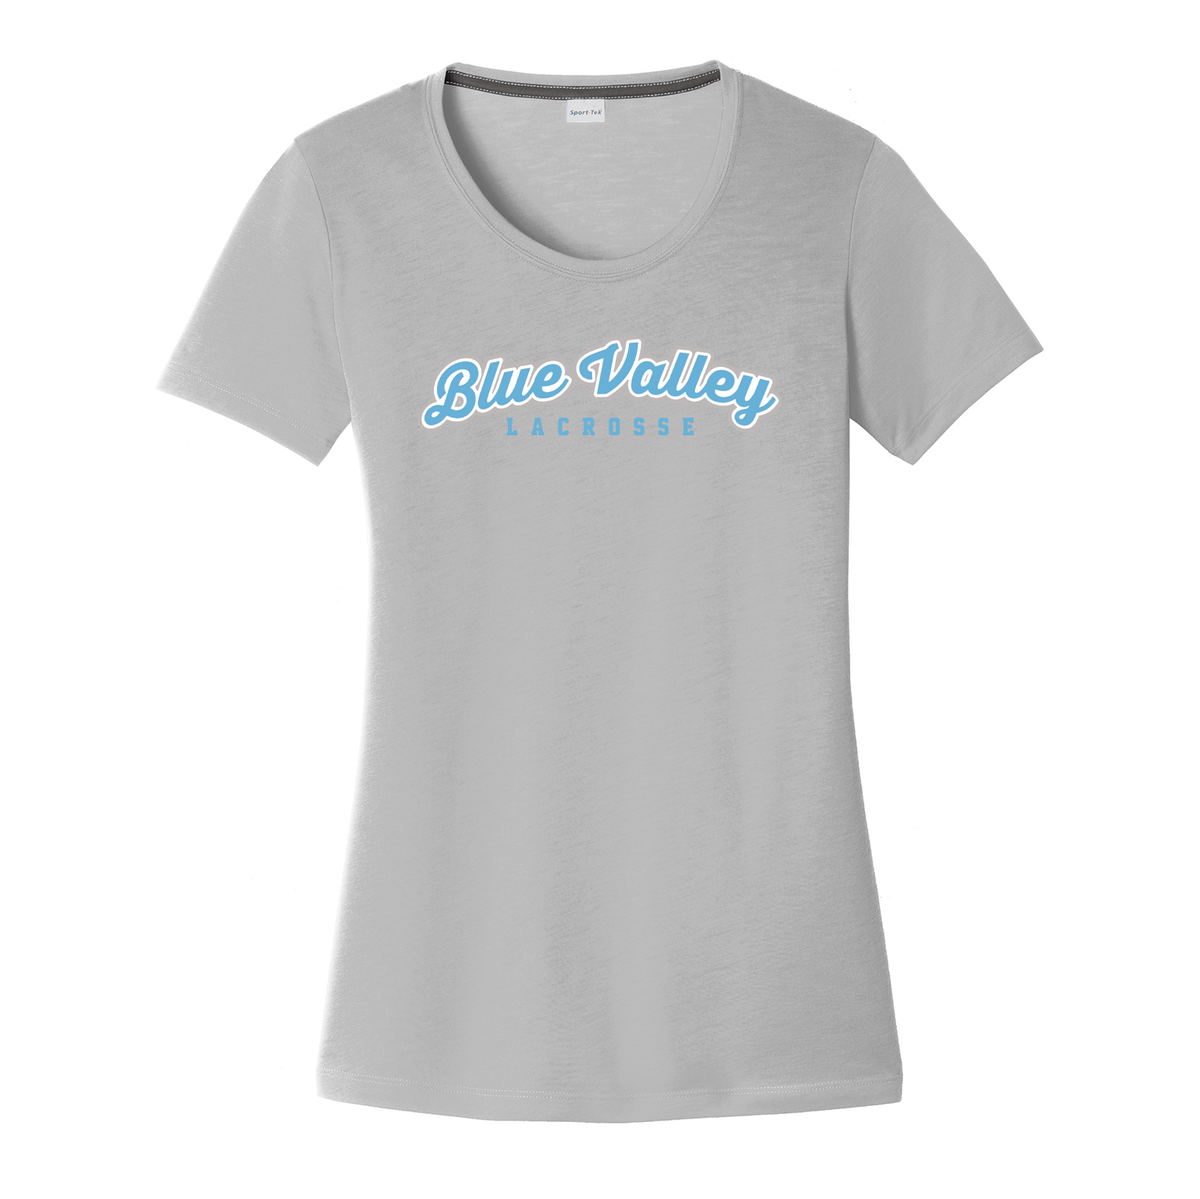 Blue Valley Spartans Women's CottonTouch Performance T-Shirt